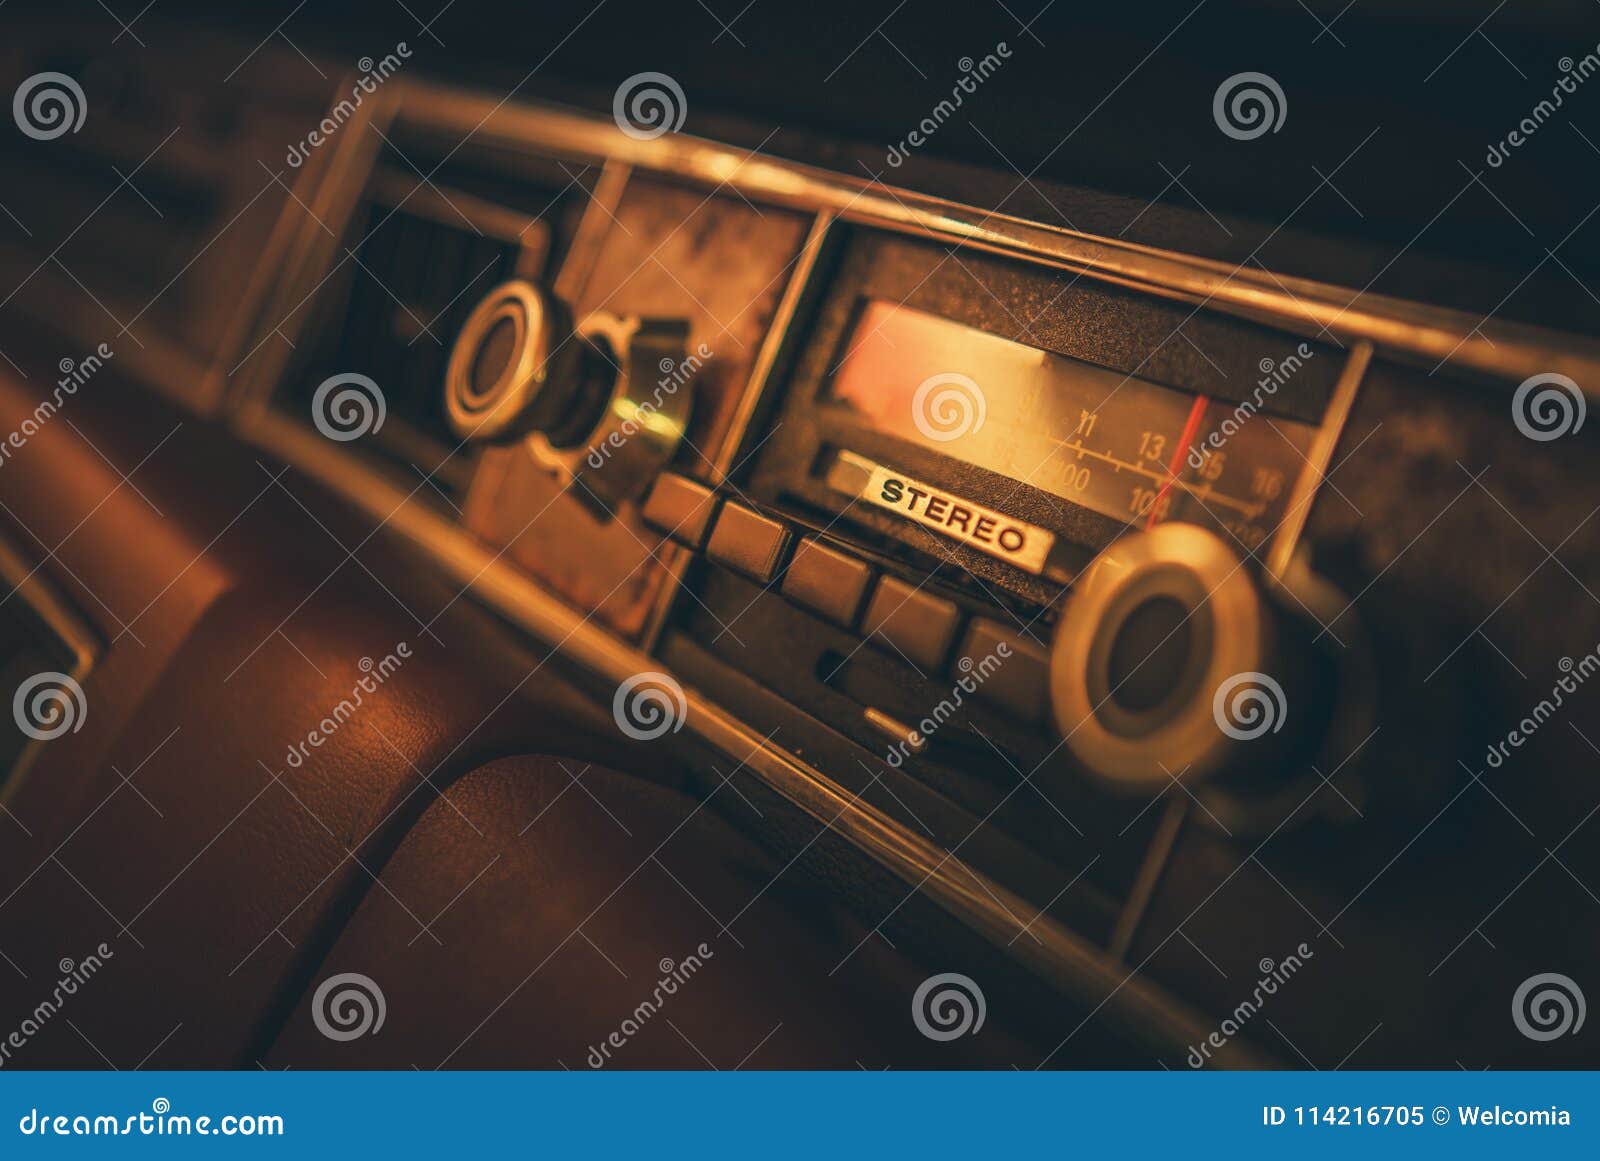 vintage classic car radio